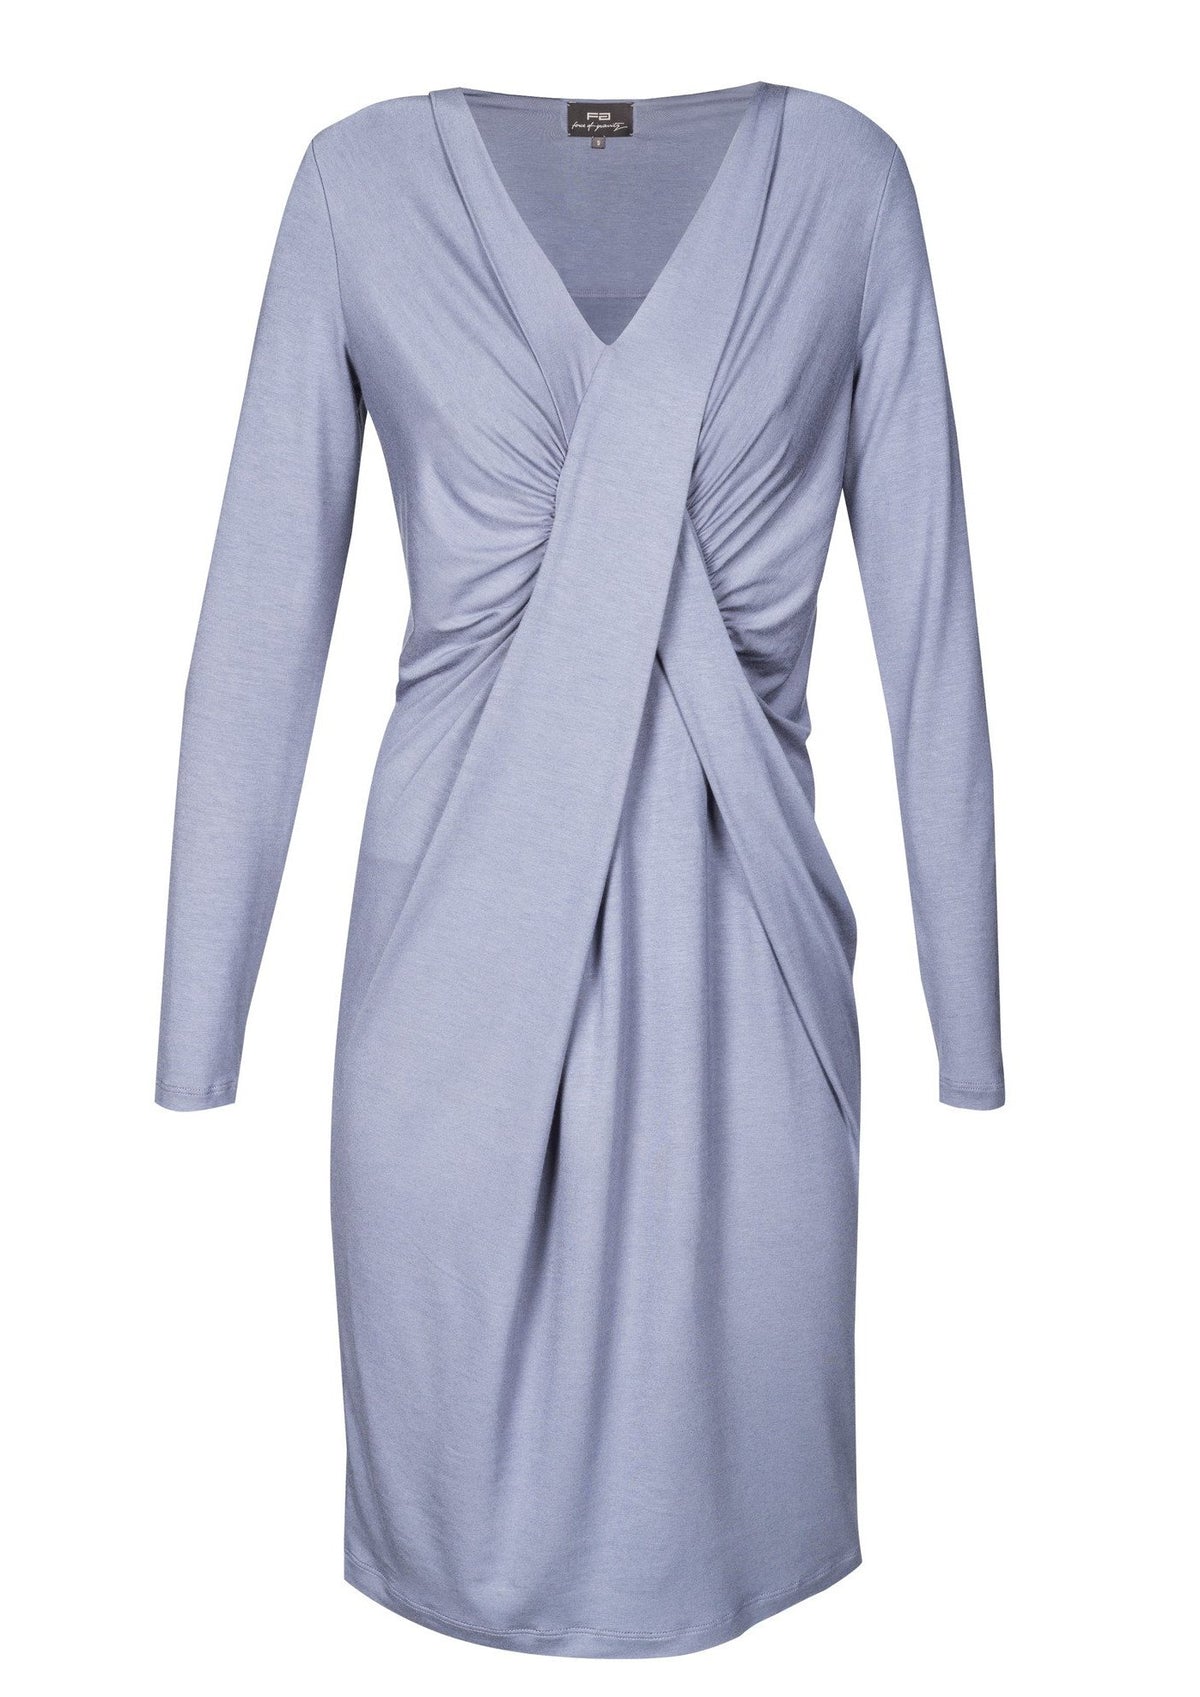 Viscose &amp; cashmere blend dress in light blue